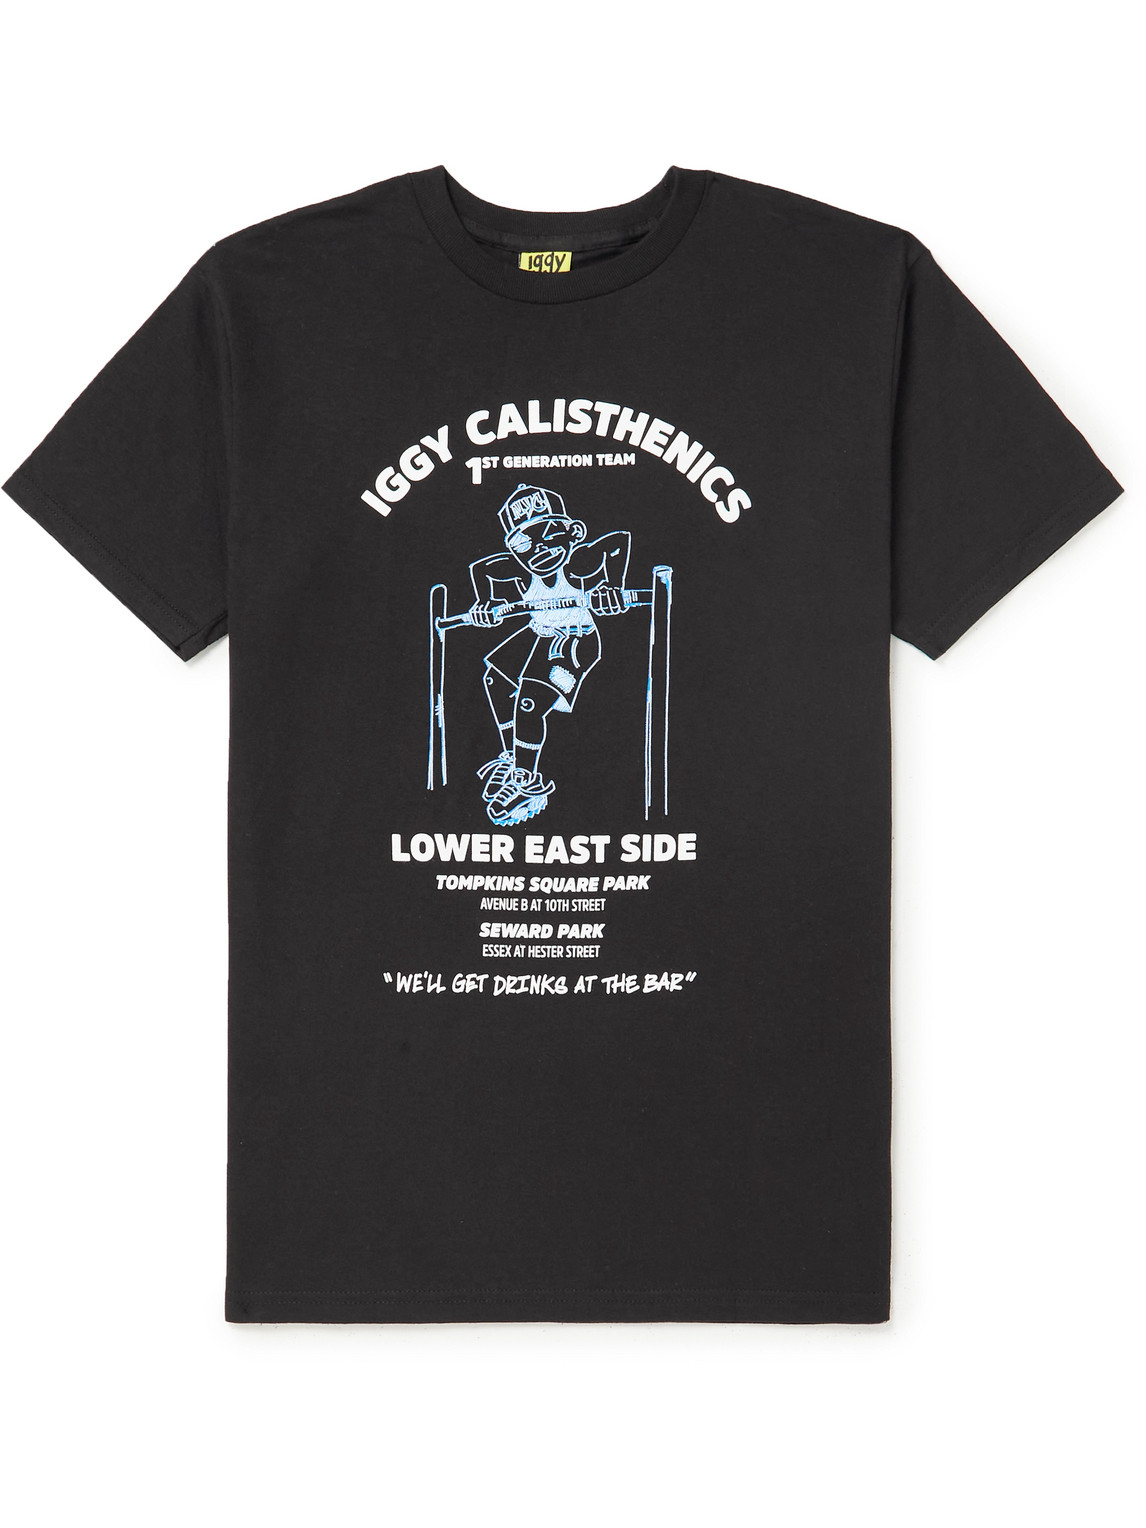 Iggy Calisthenics Team Printed Cotton-jersey T-shirt In Black